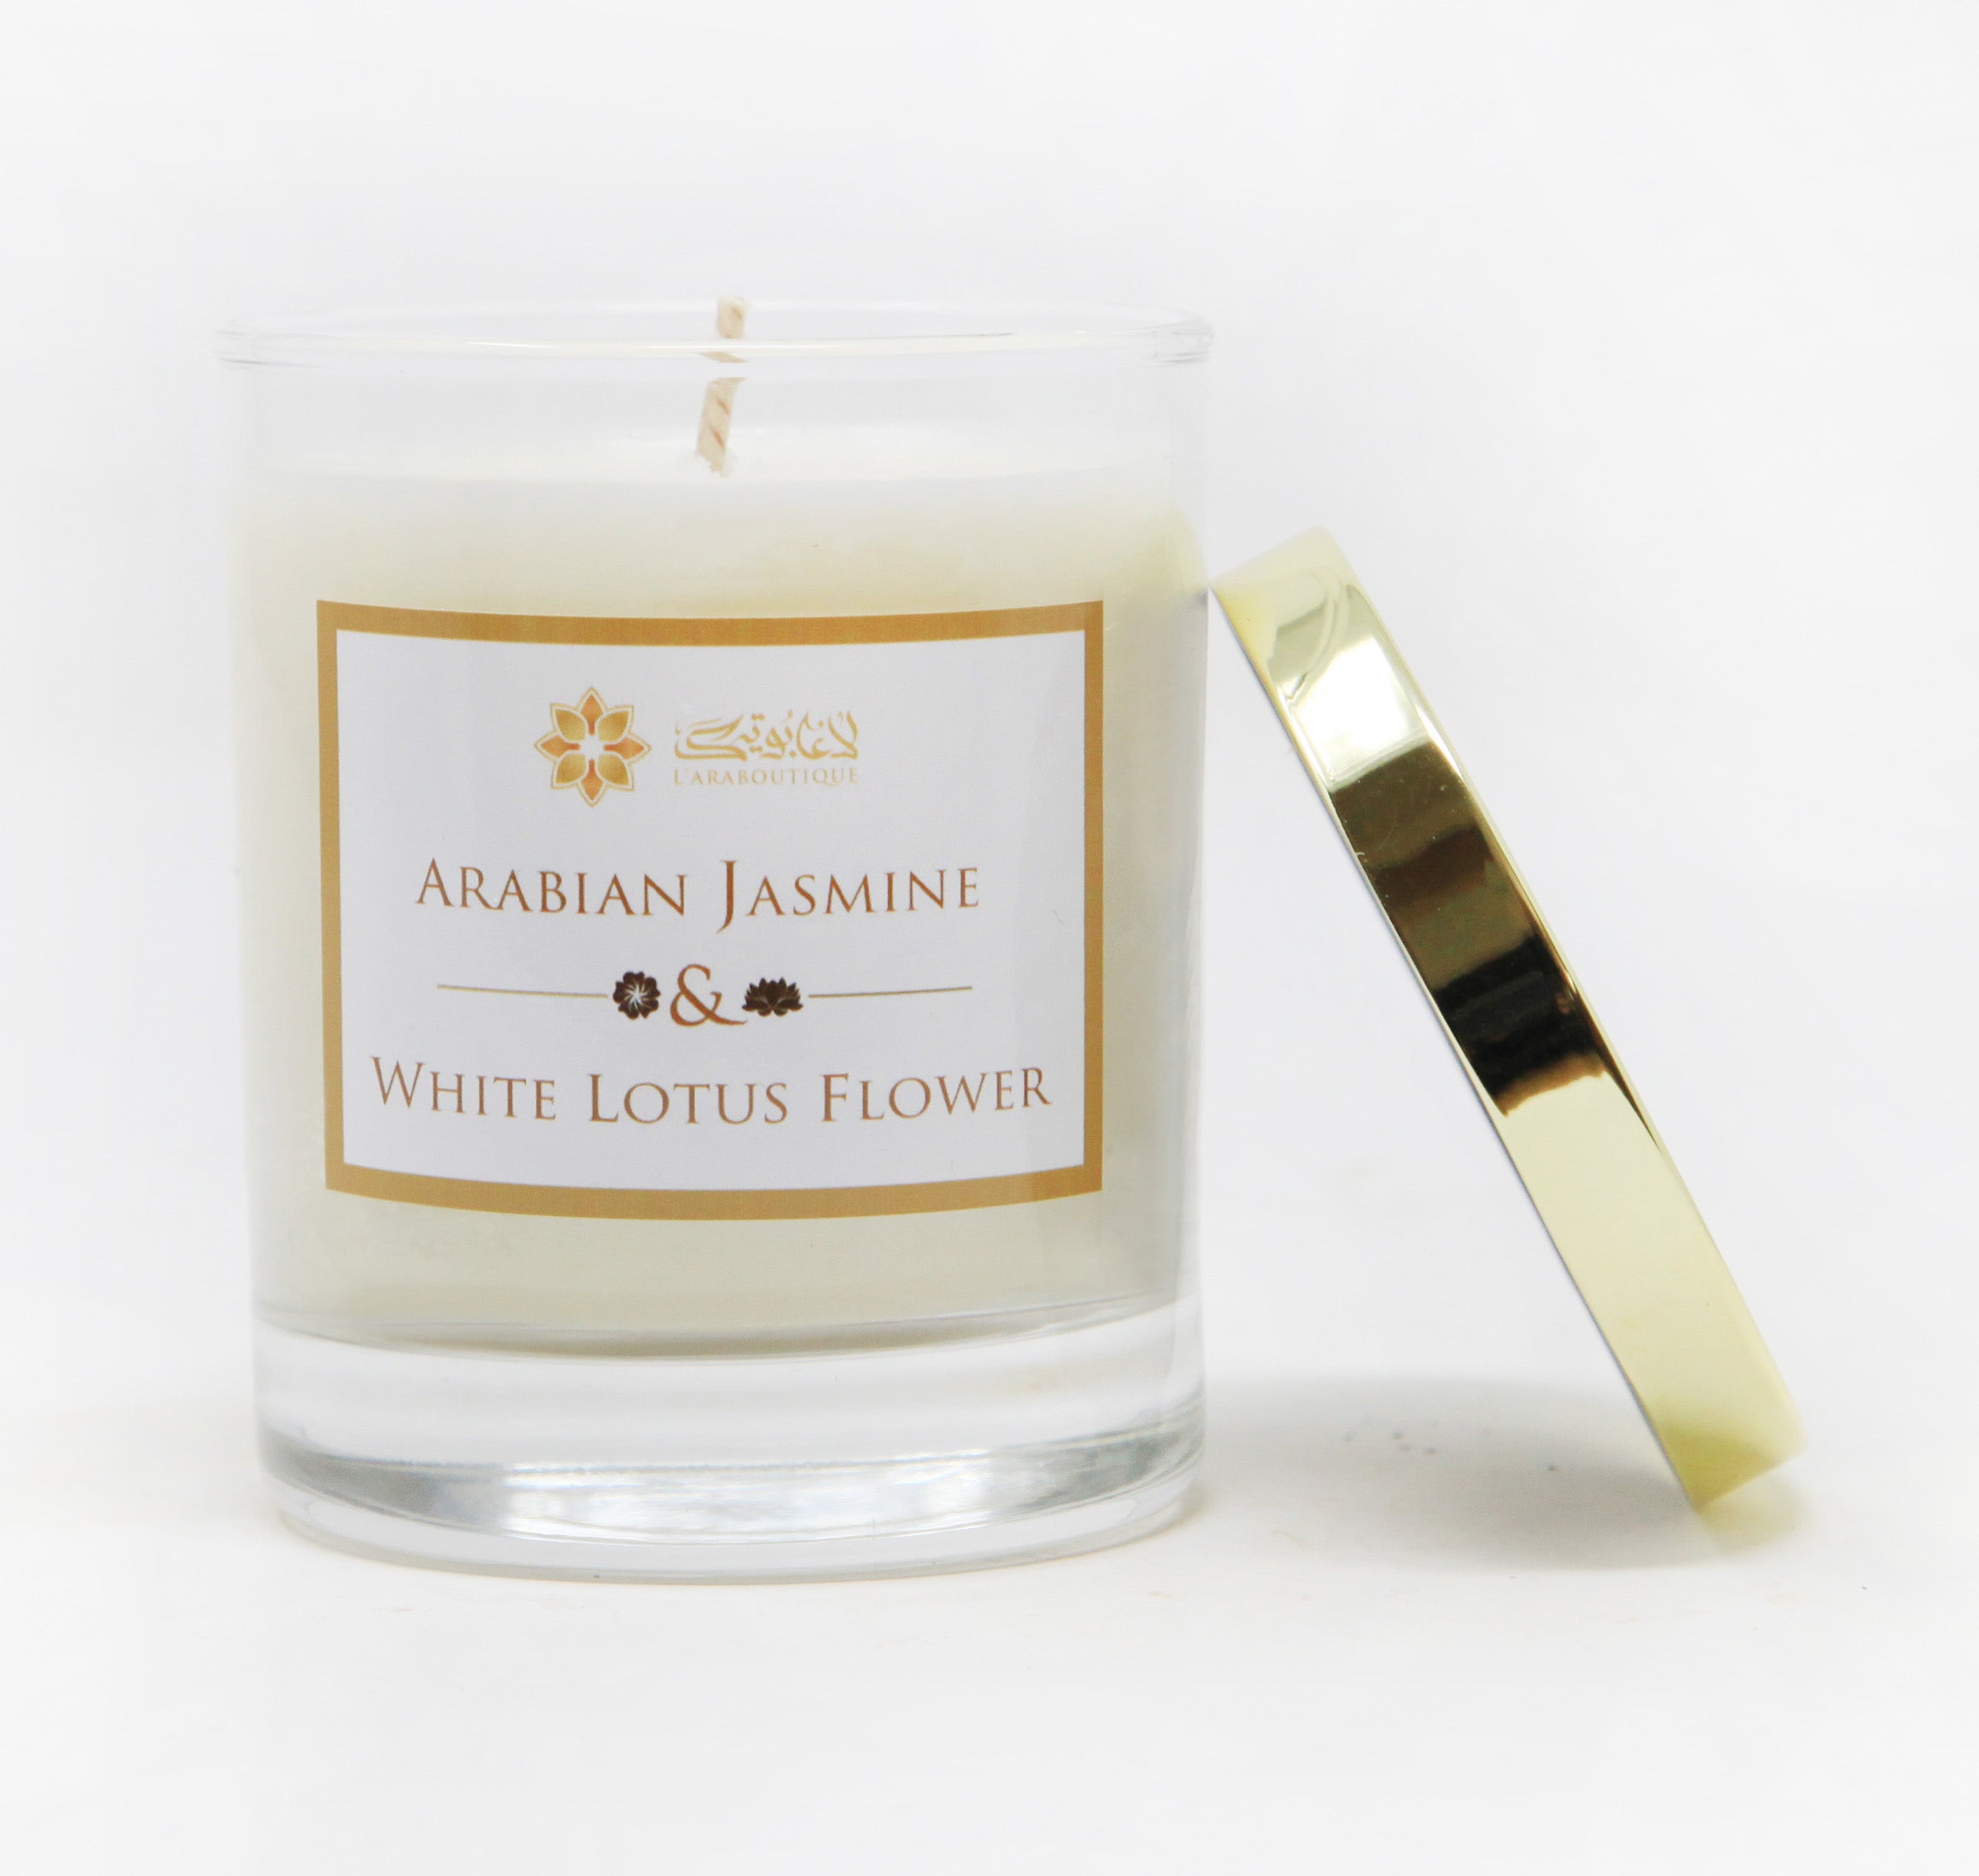 Arabian Jasmine and White Lotus Flower Candle